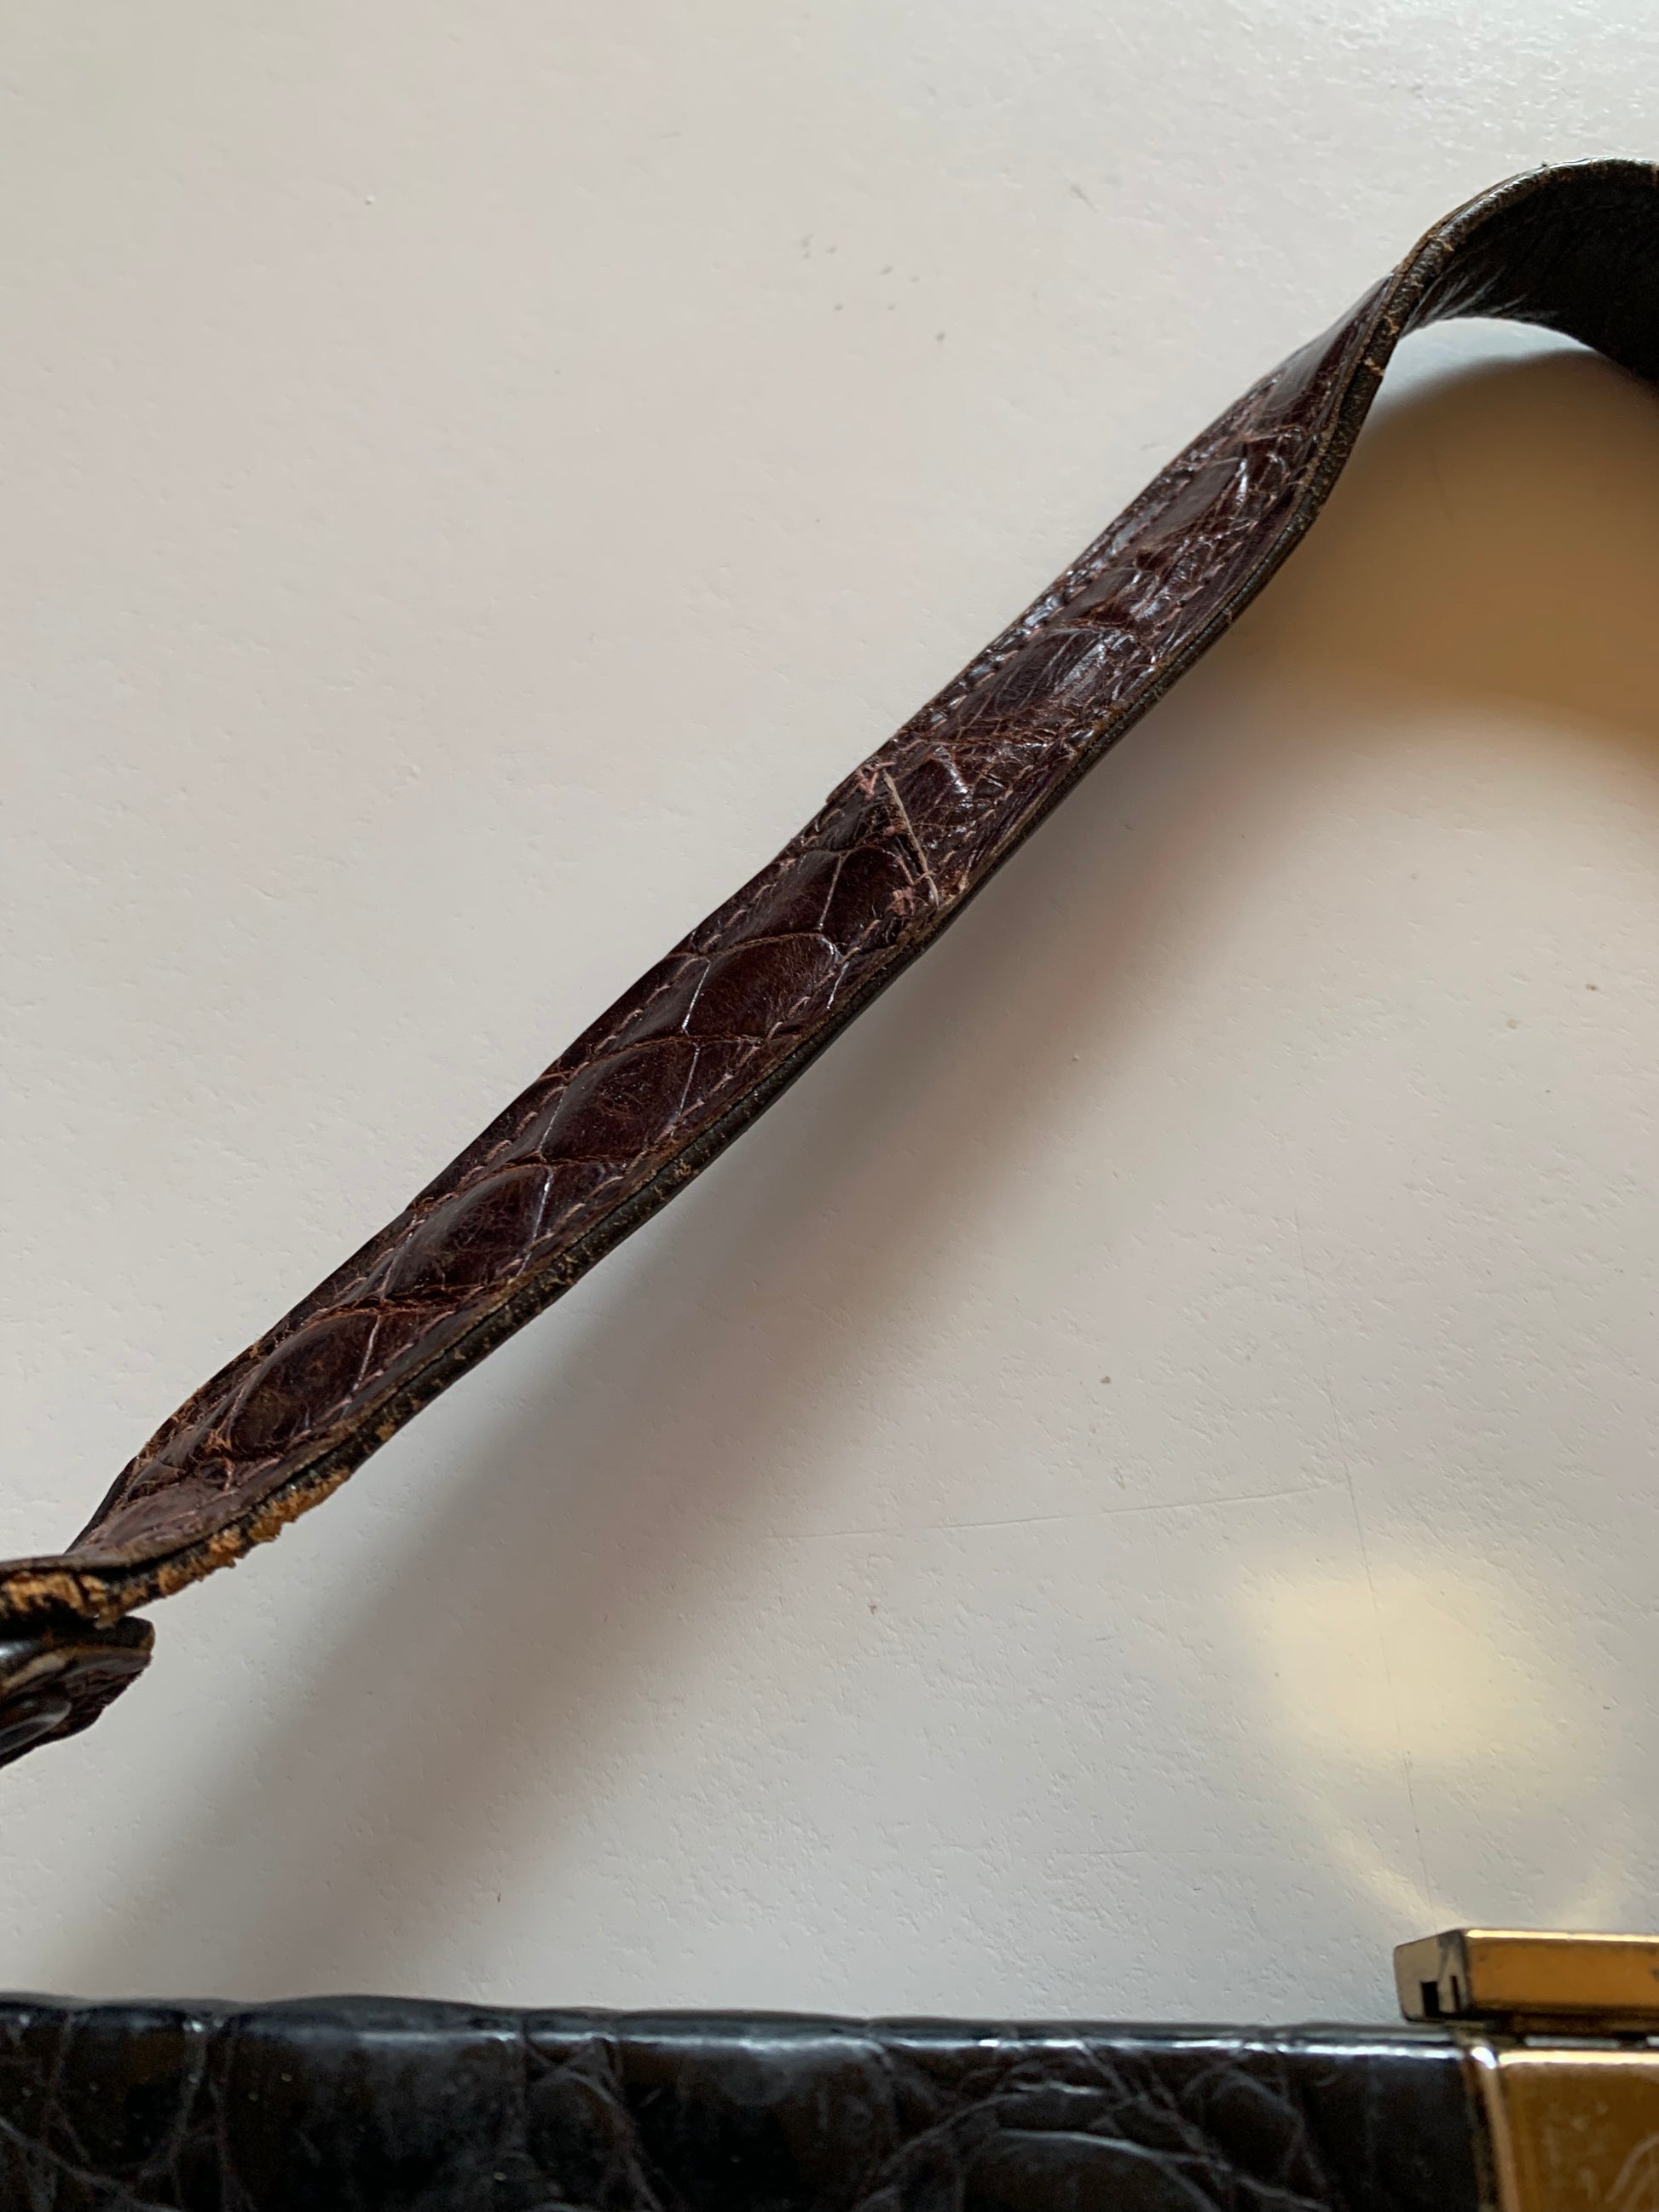 1940s-1950s brown alligator purse —, a brief history